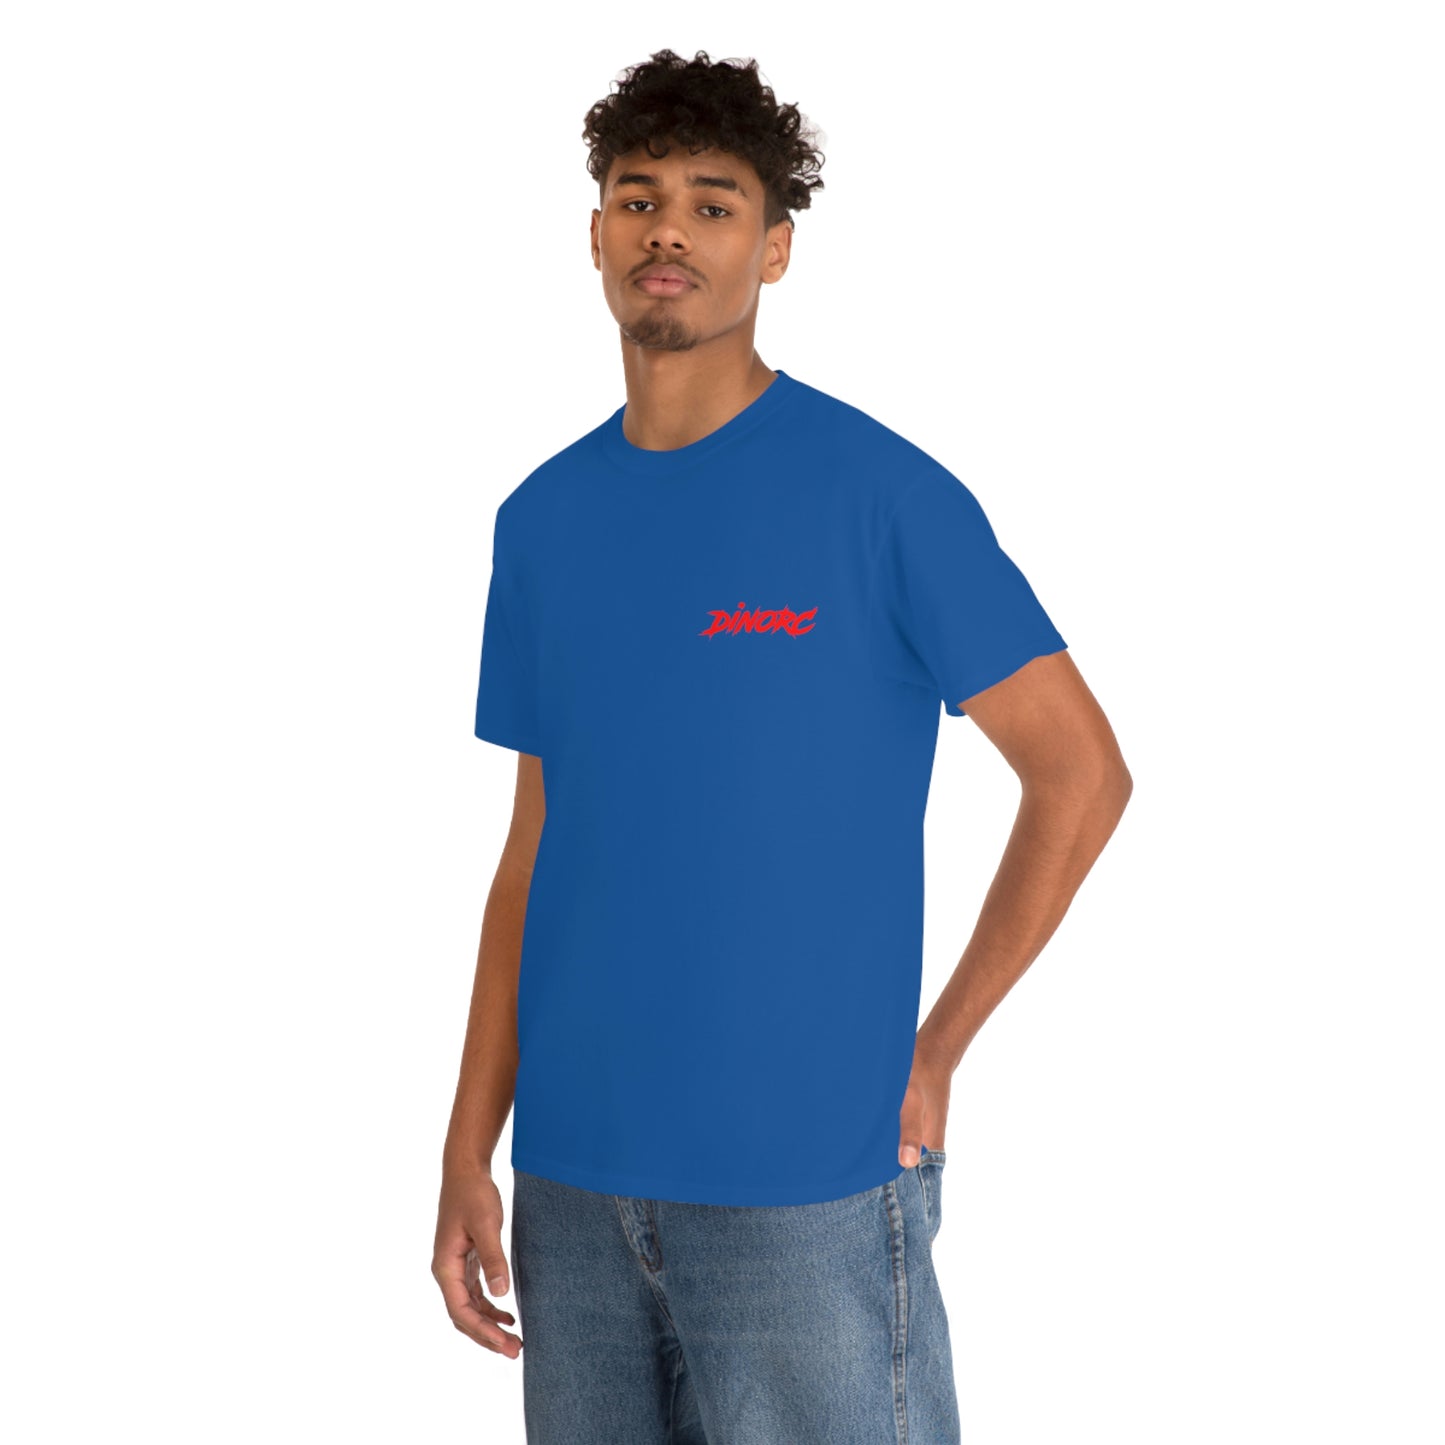 Low N Slow  Front Back DinoRc Logo T-Shirt S-5x Black or Blue